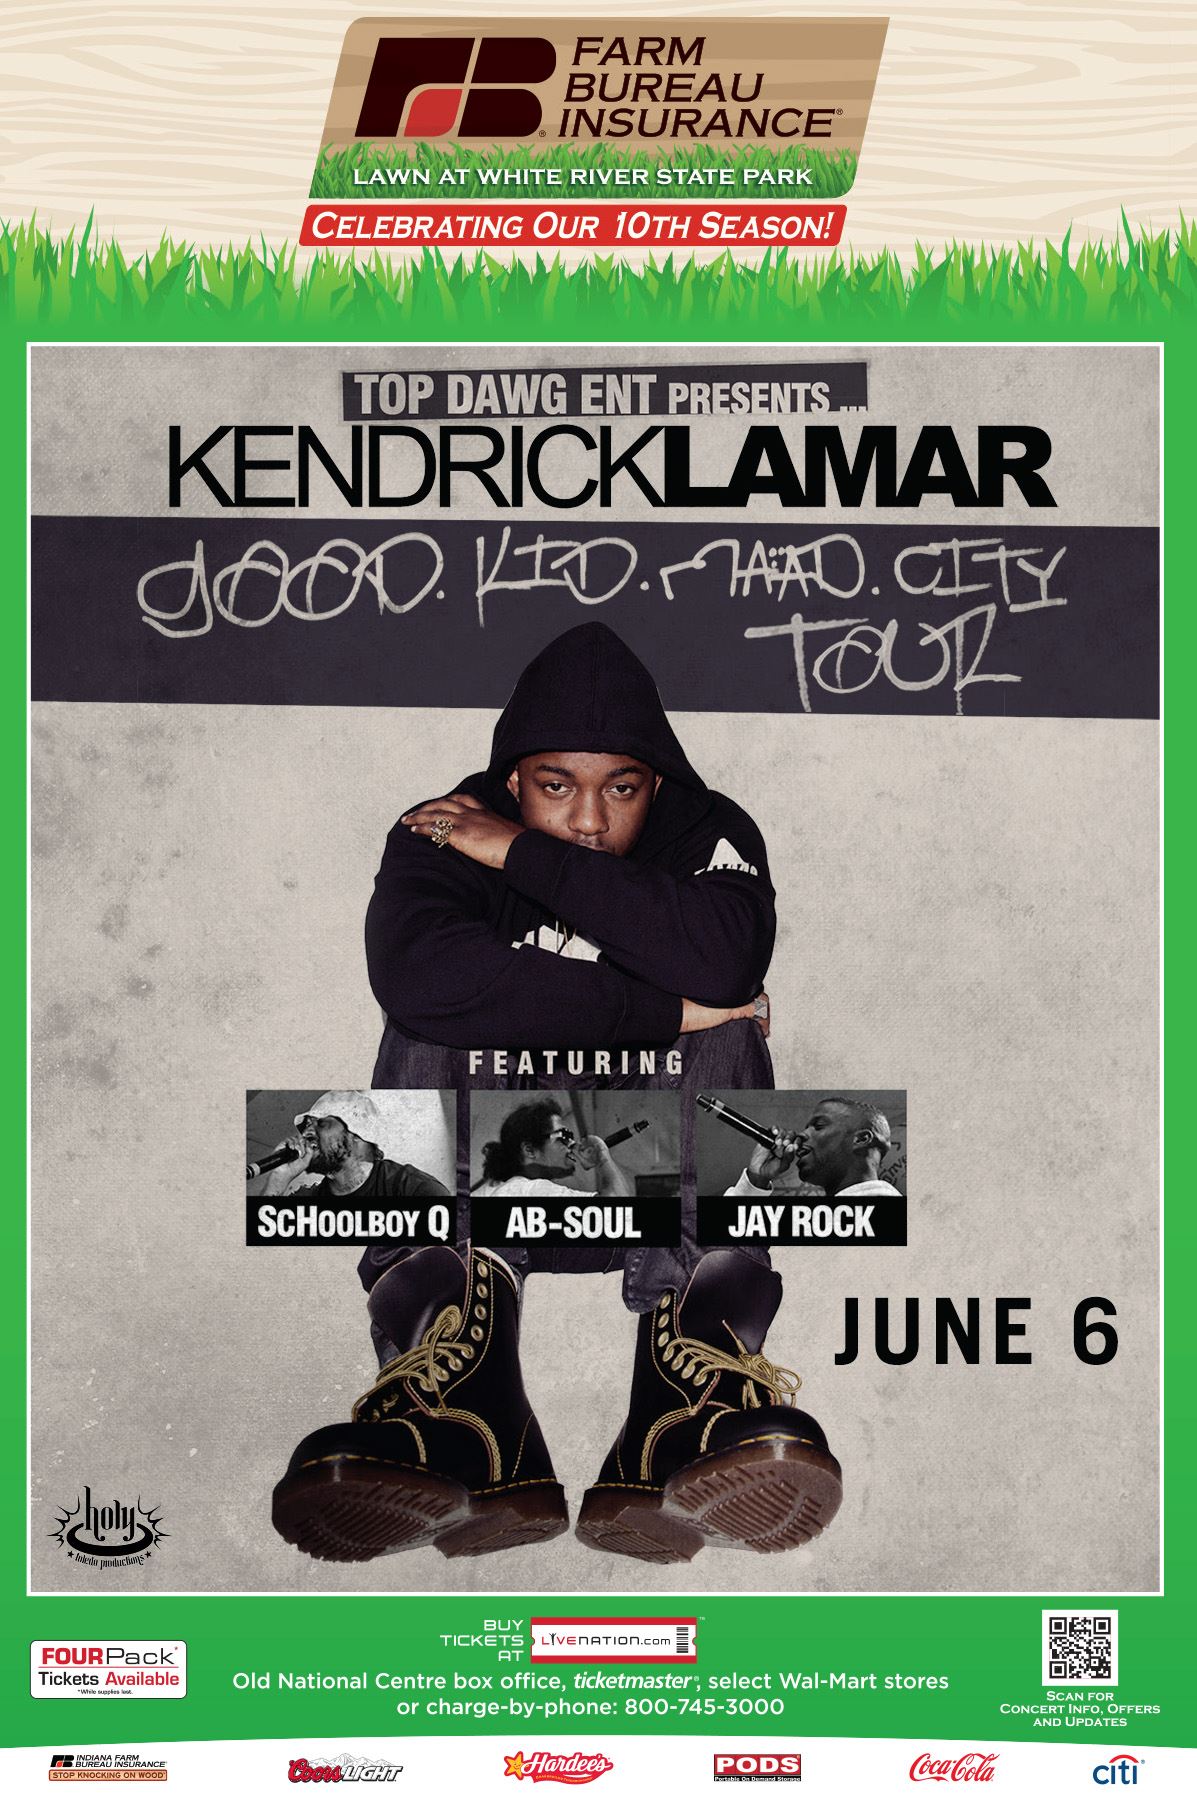 Upcoming Event: Kendrick Lamar & TDE The Good Kid, m.A.A.d. City Tour @ Farm Bureau Insurance Lawn at White River State Park (6/6/13)